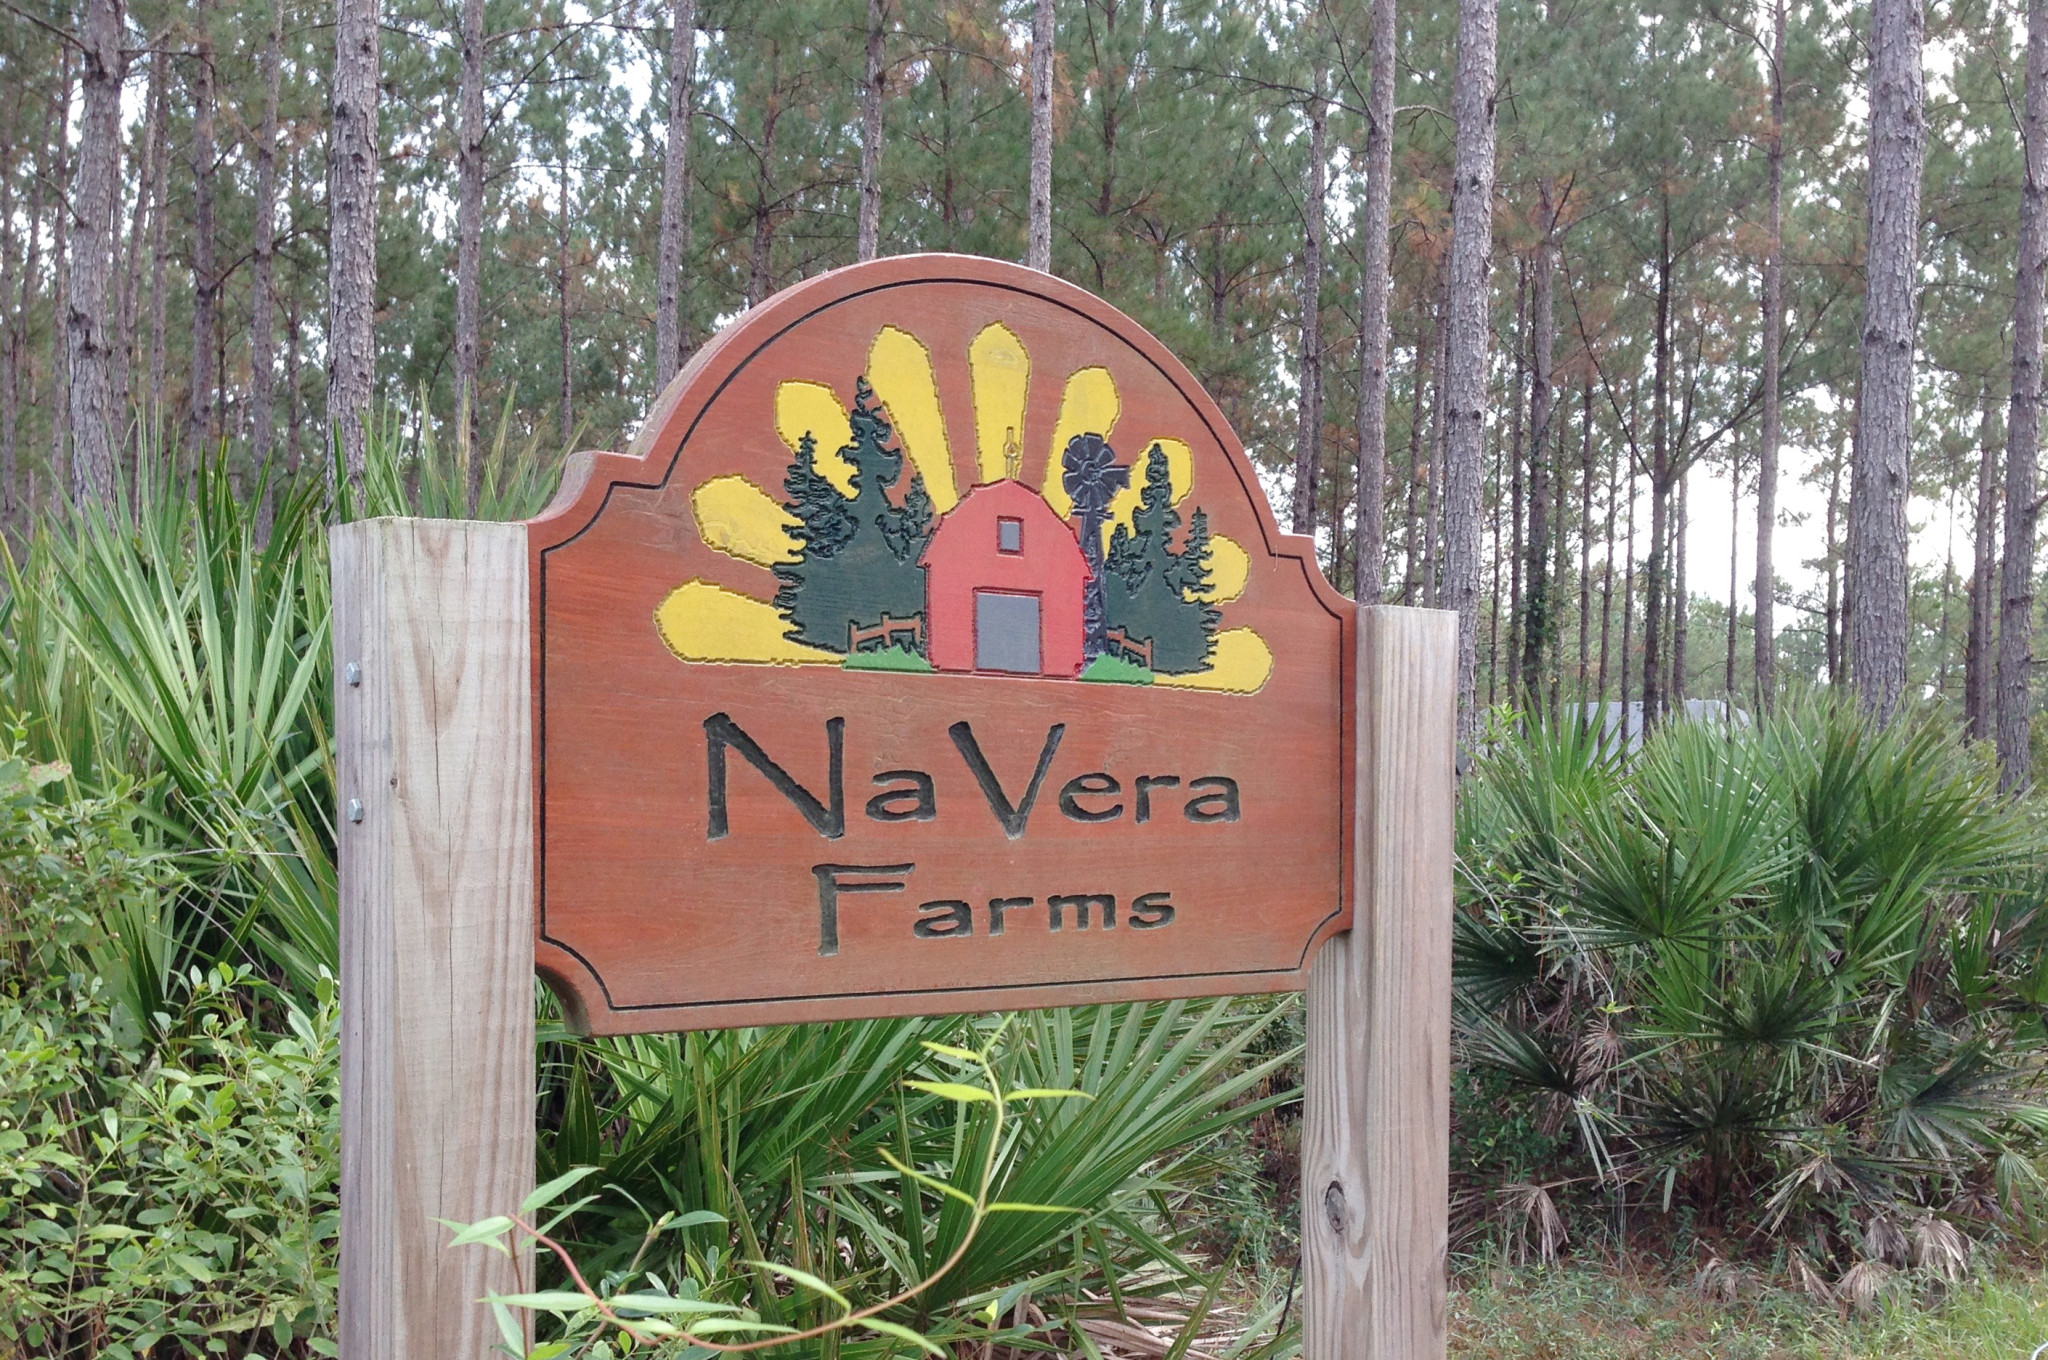 NaVera Farms